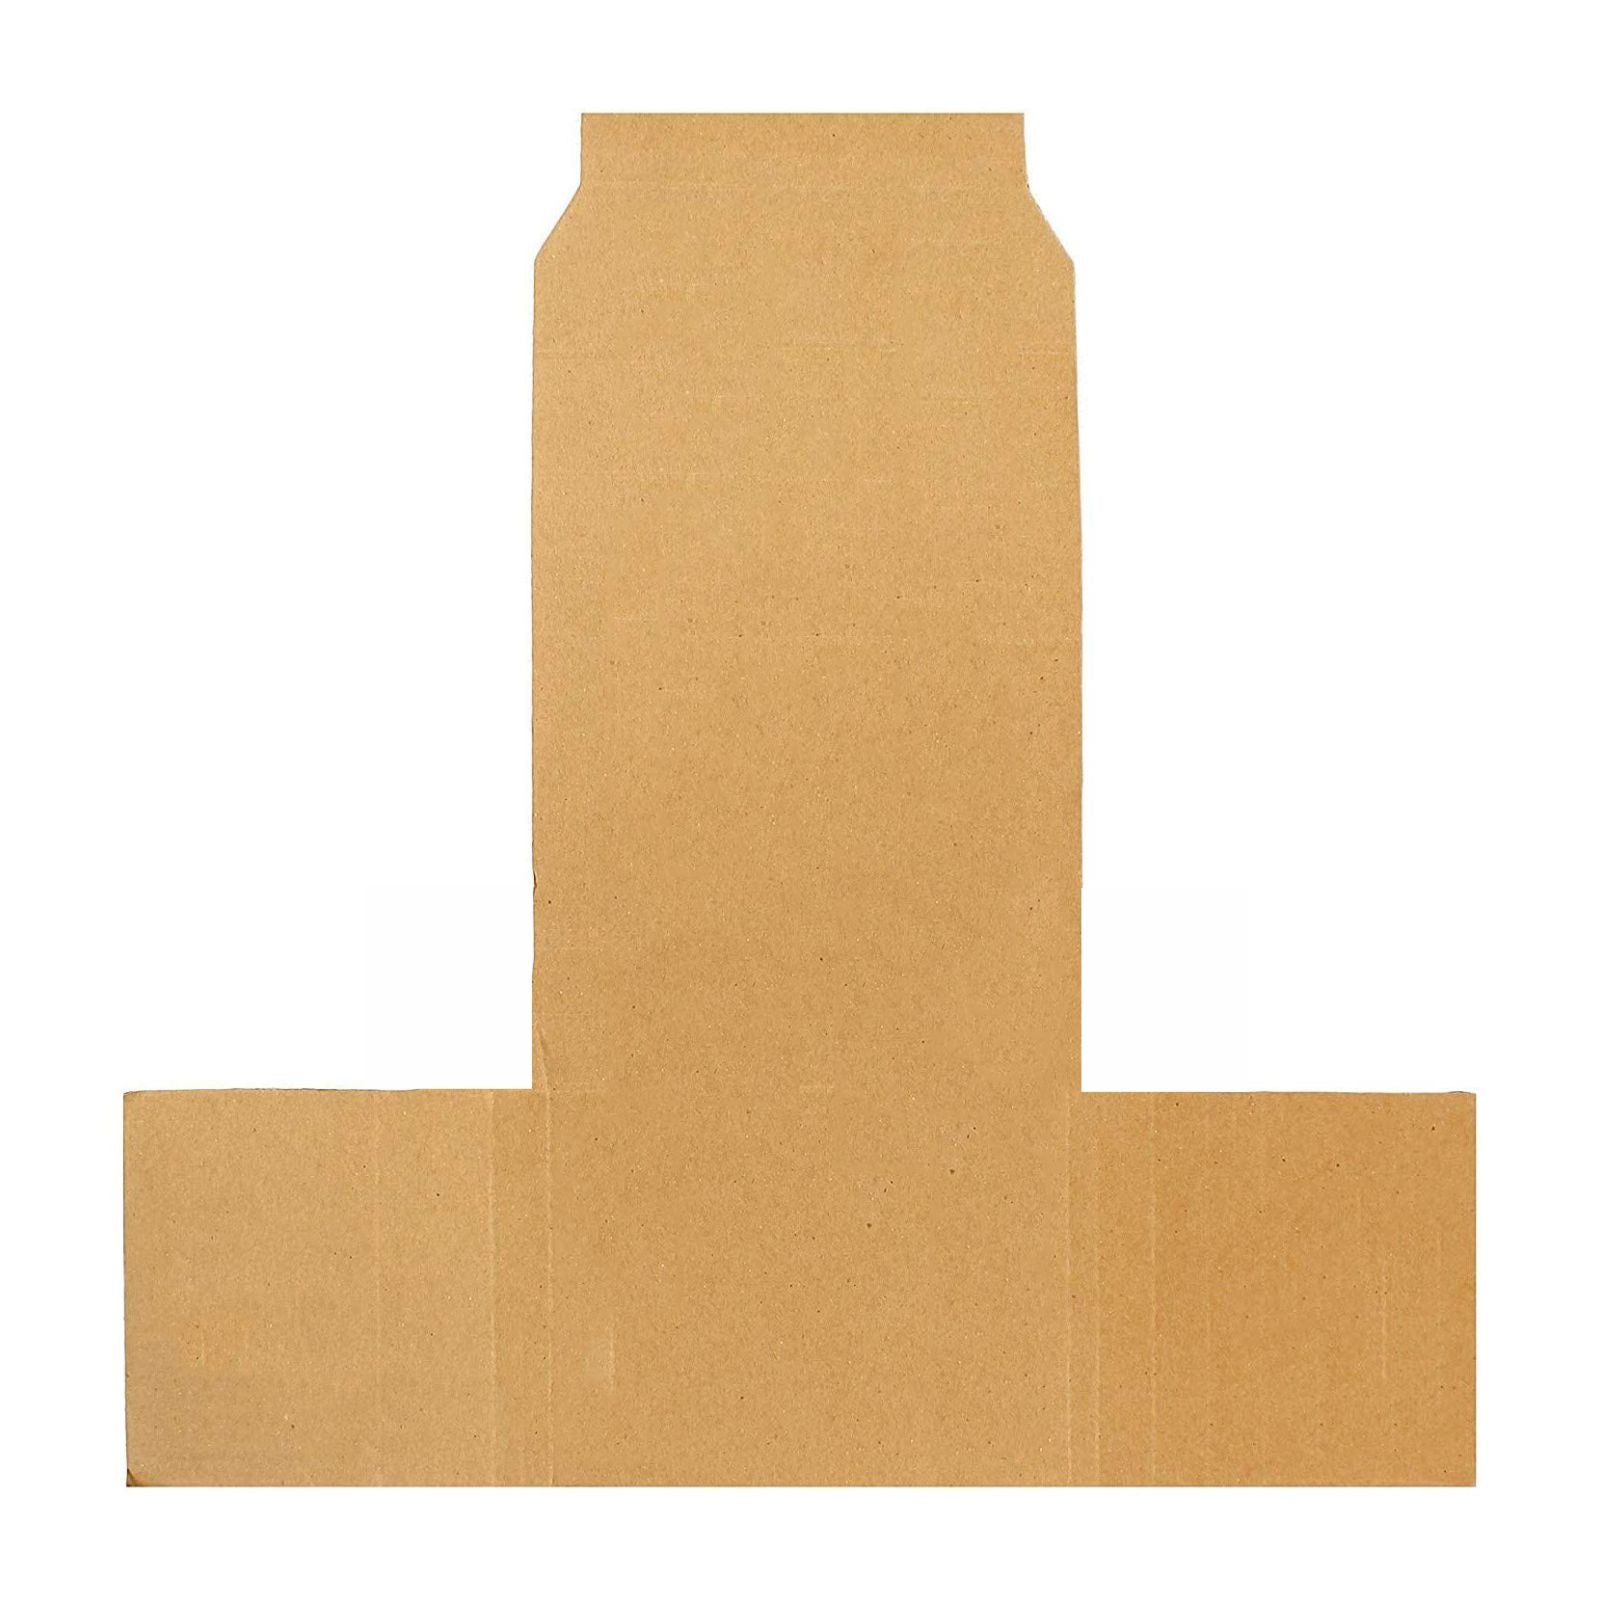 T Shape Folders for Shipping, Flexible Box